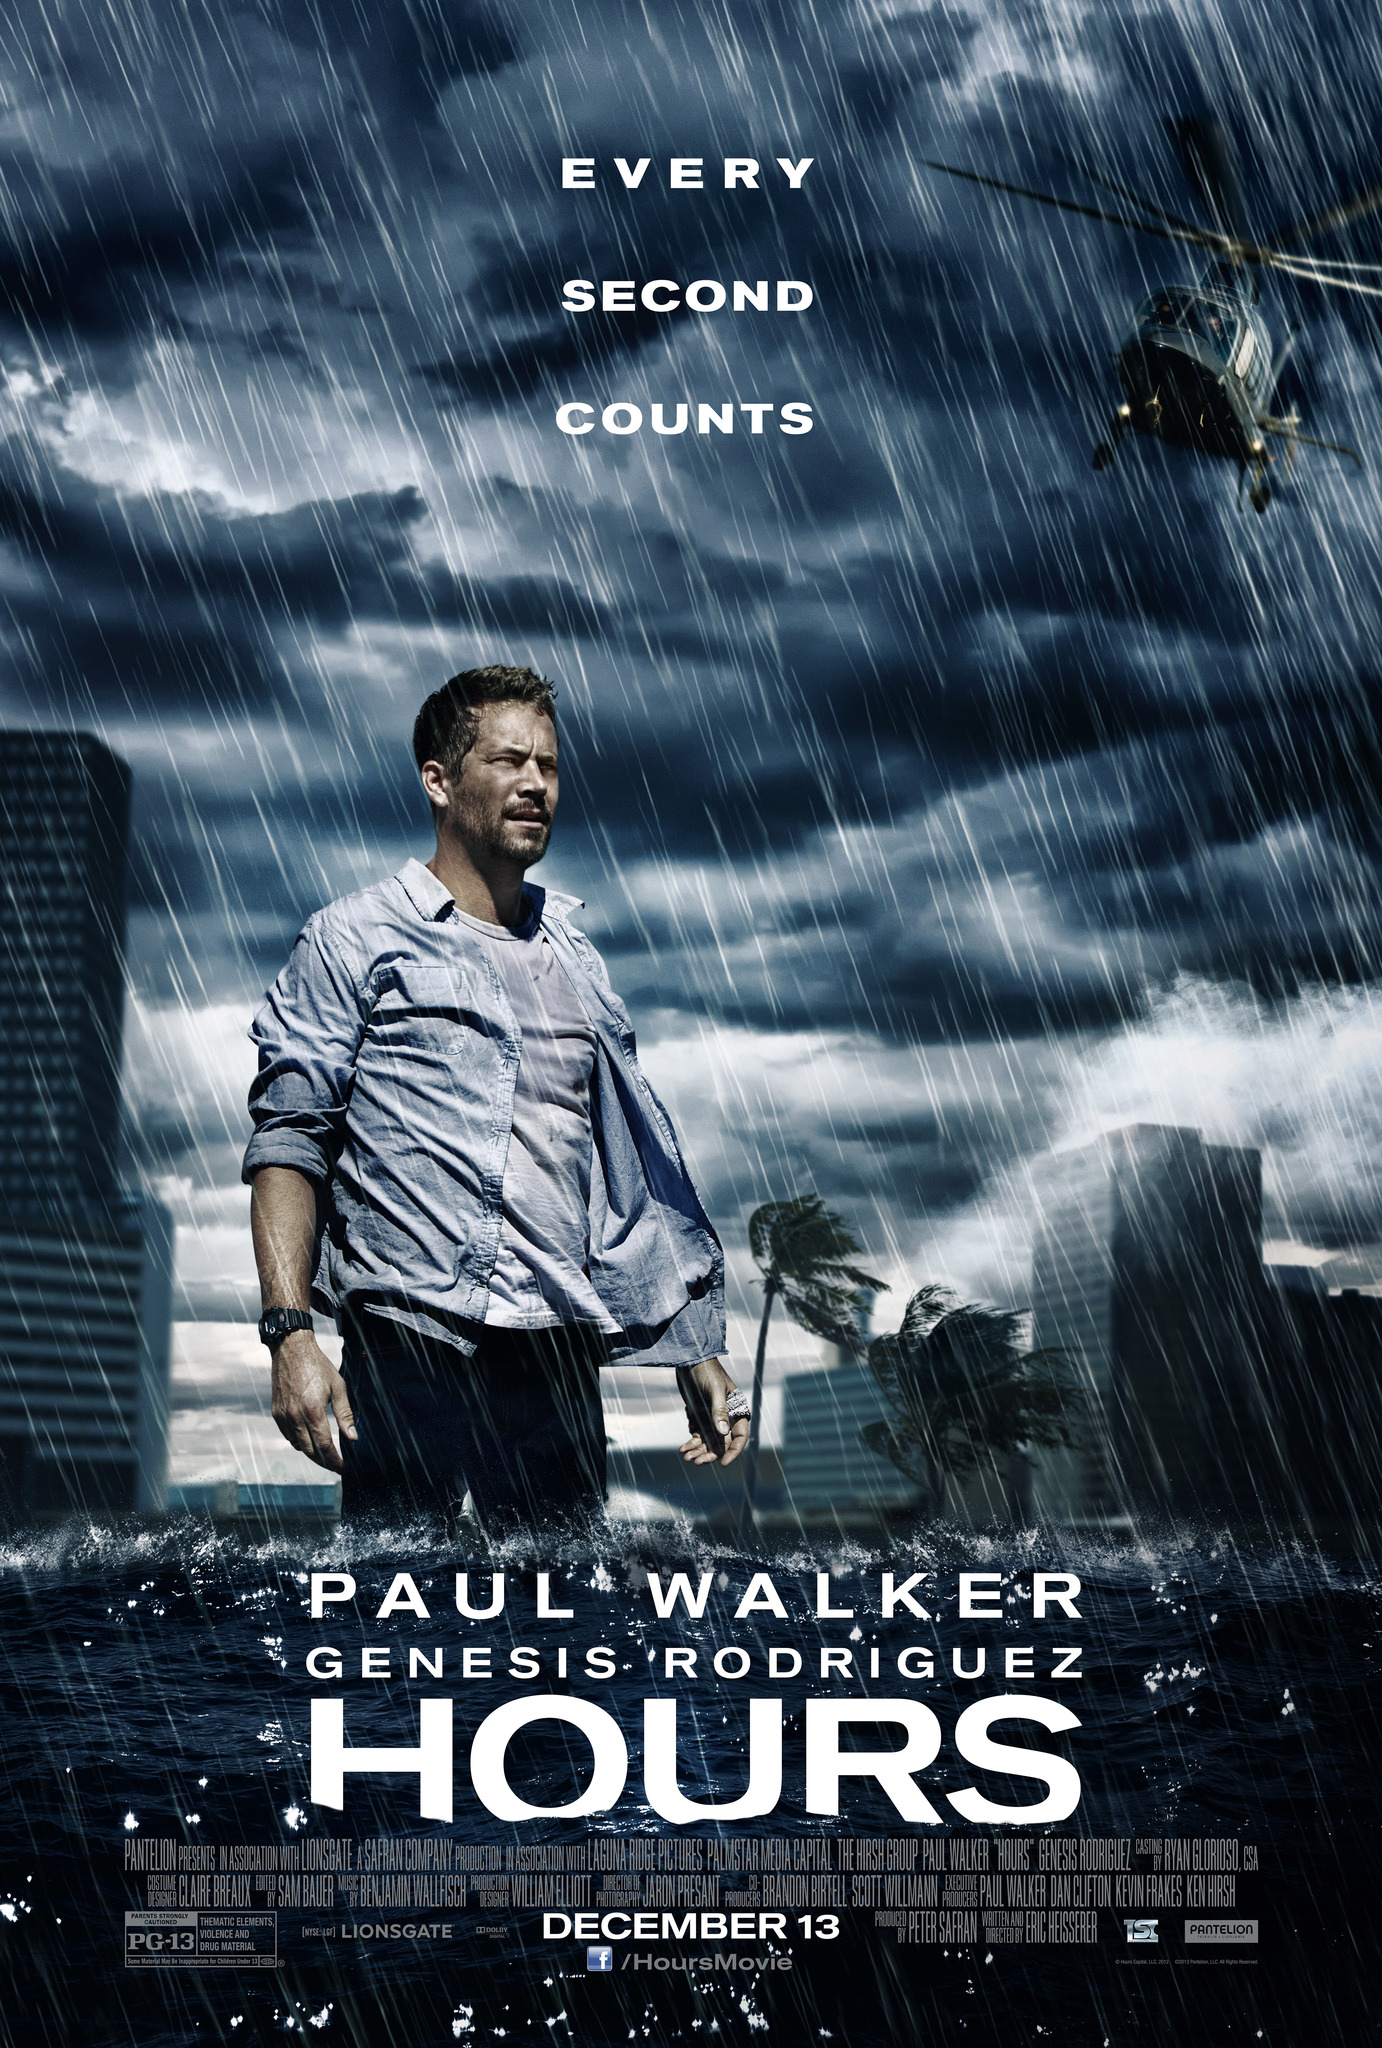 Hours (2013) ฝ่าวิกฤติชั่วโมงนรก Paul Walker